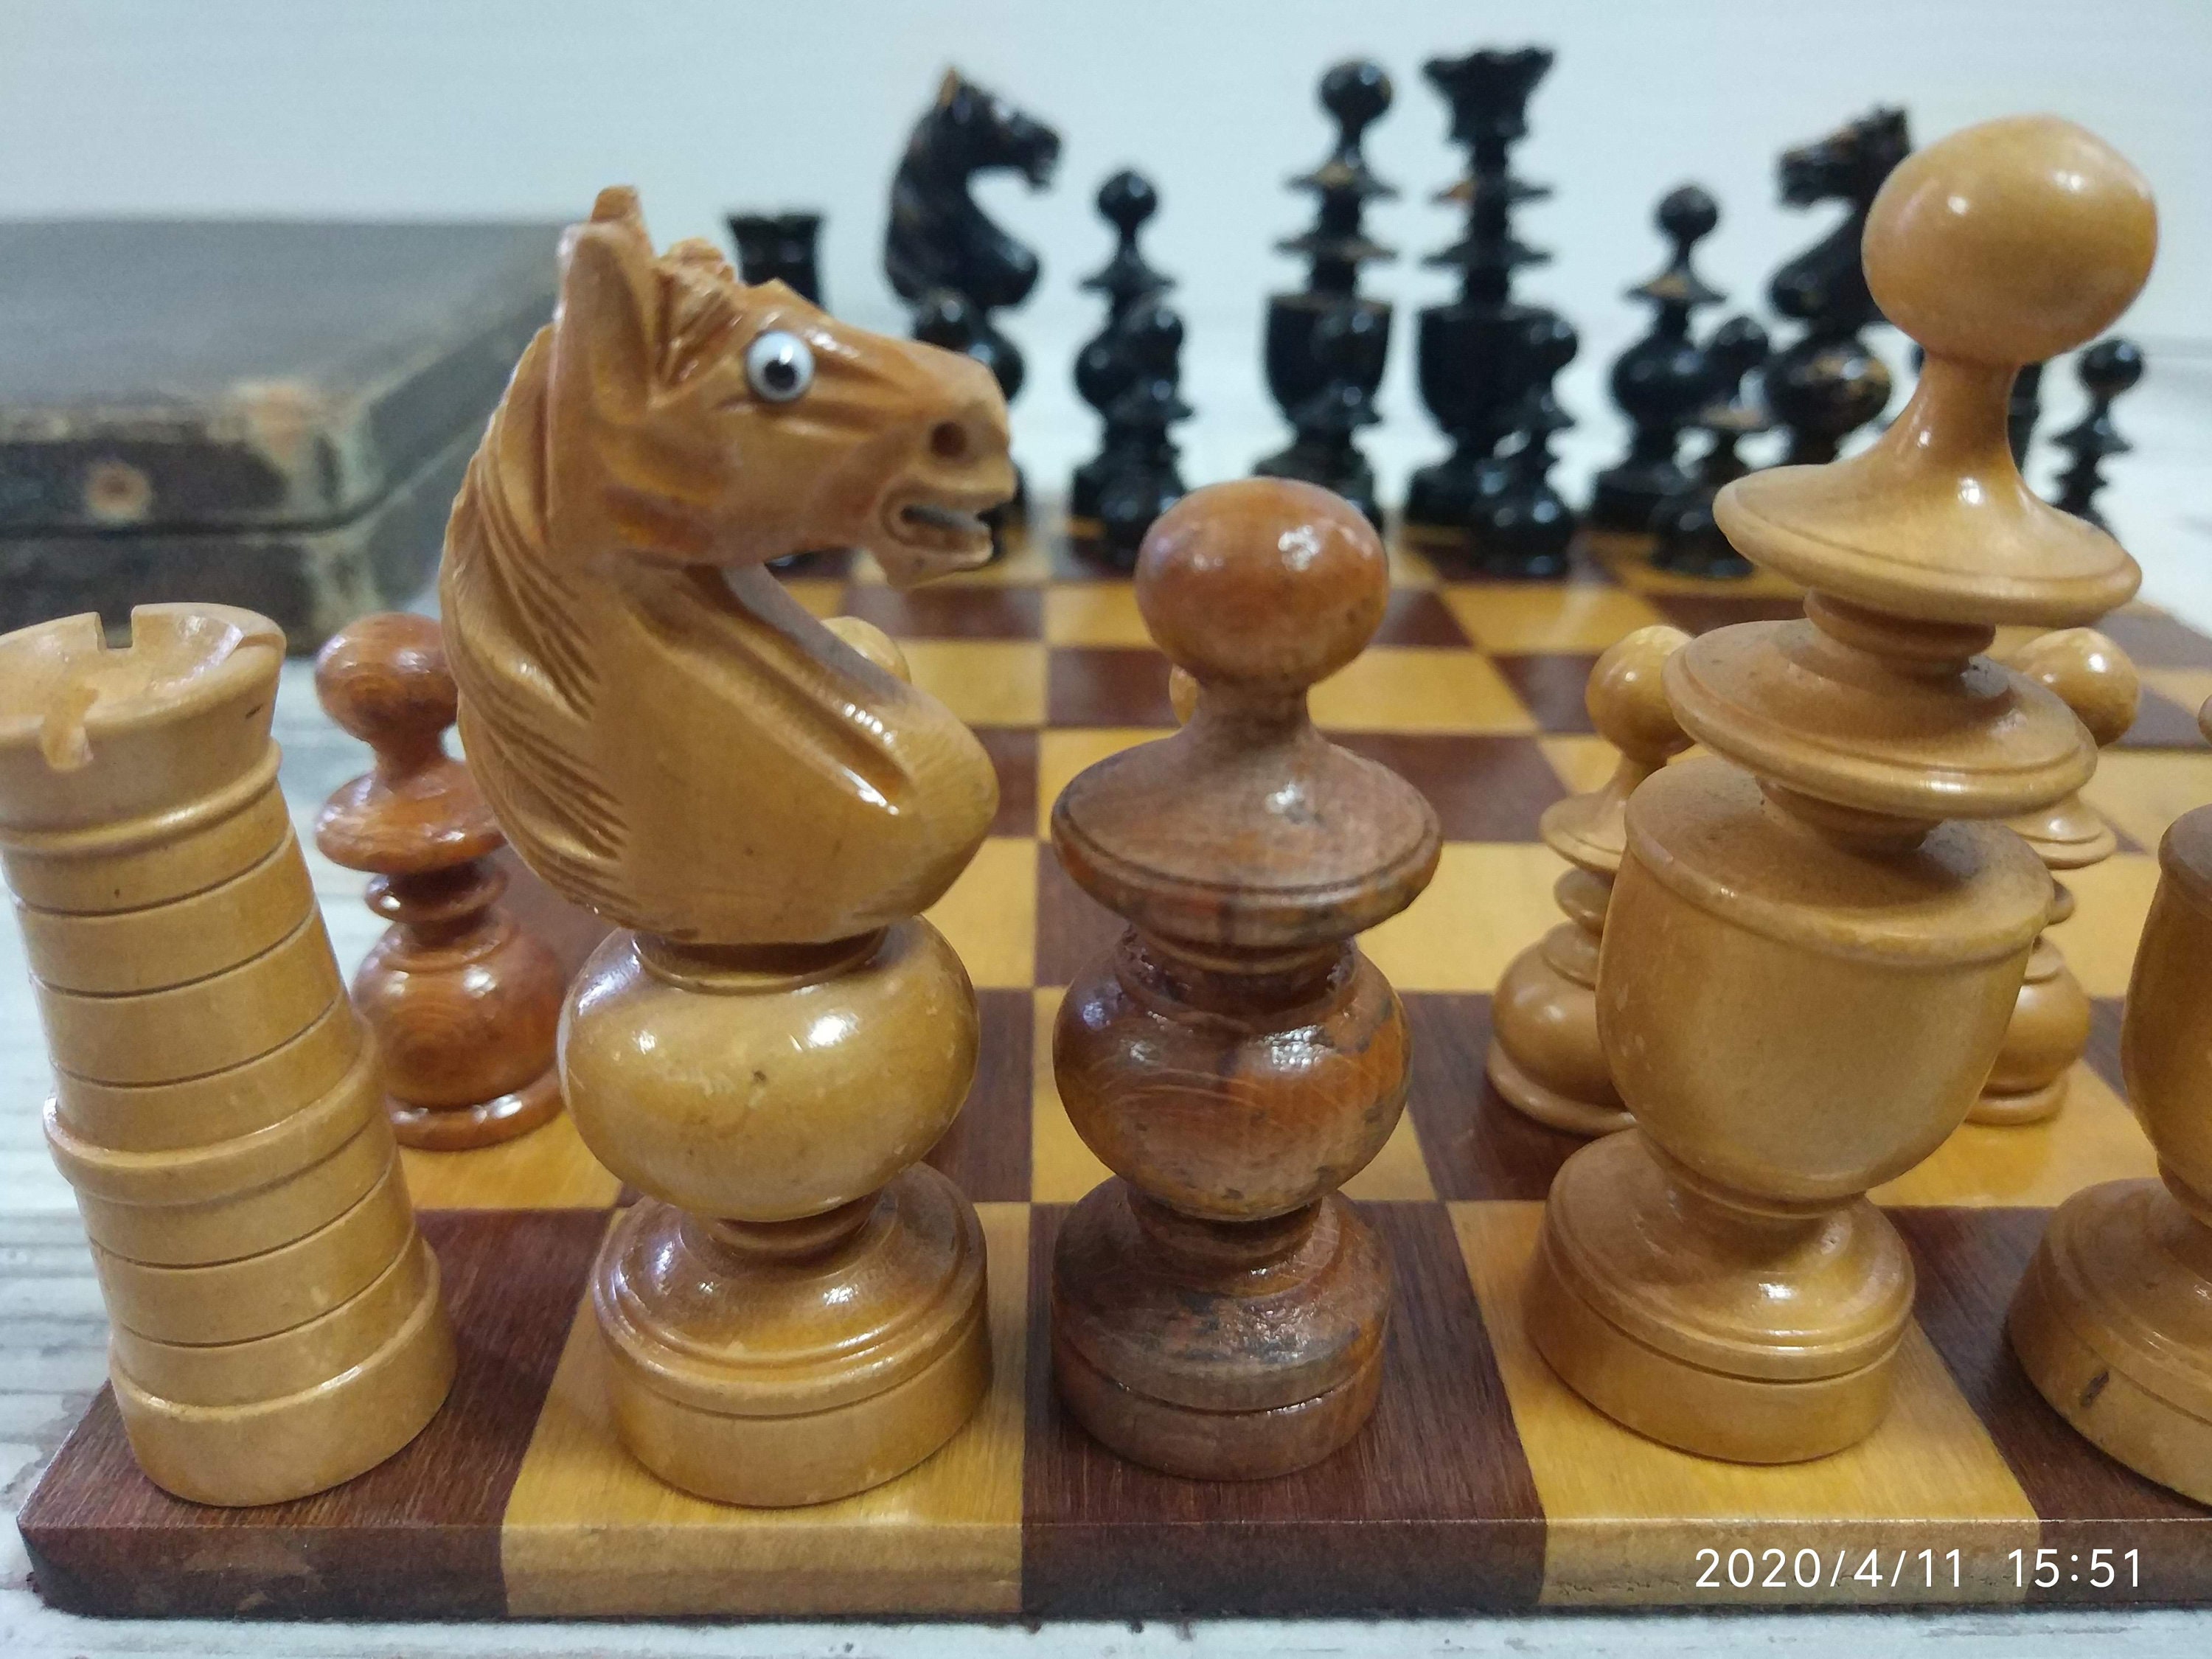 French Regѐnce Antique Chessmen - www.ChessAntique.com